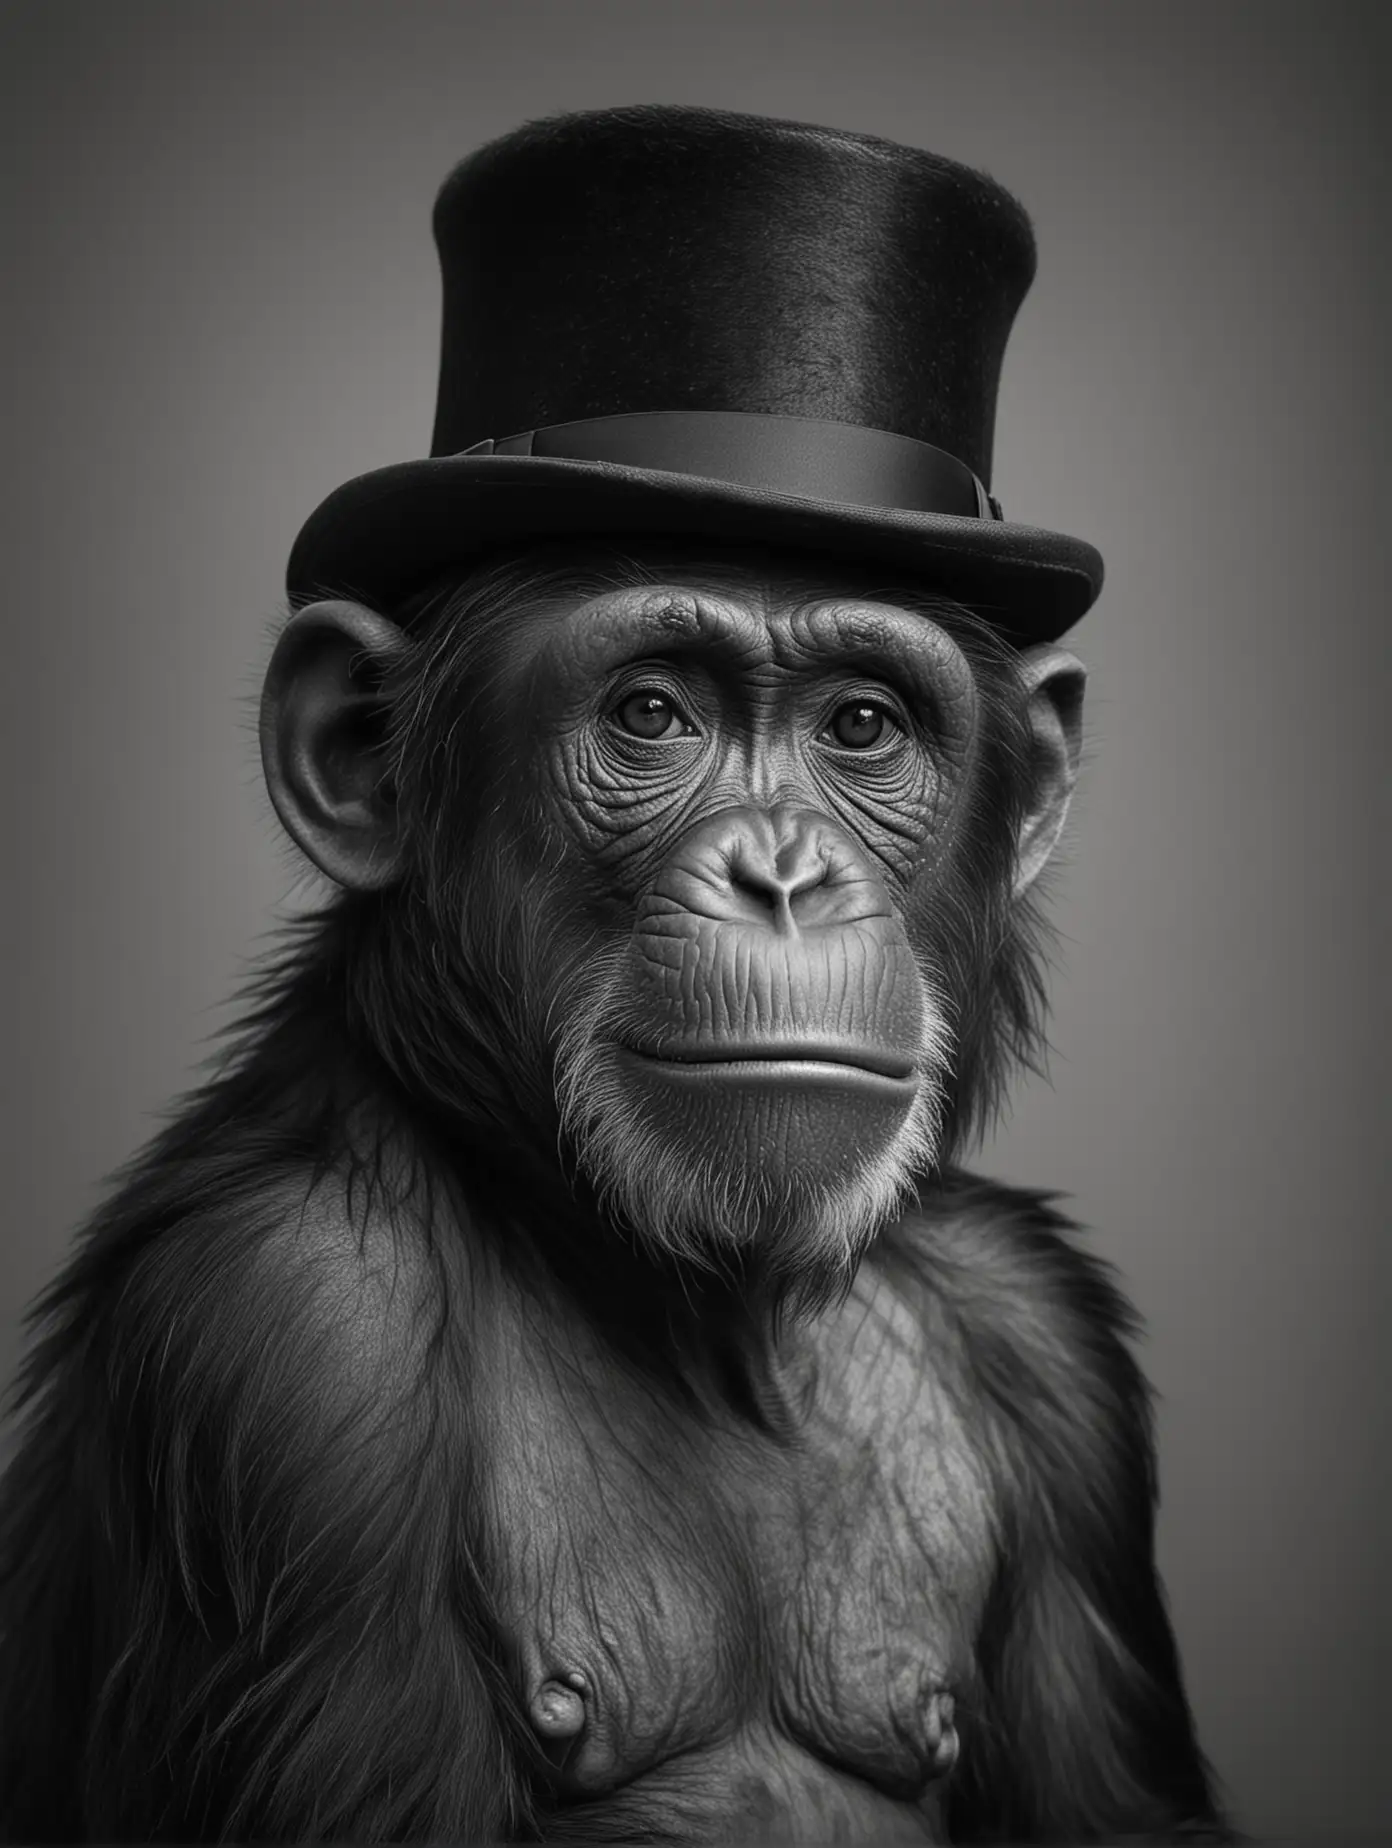 Sad Chimpanzee Wearing Black Top Hat in HighQuality Black and White Image